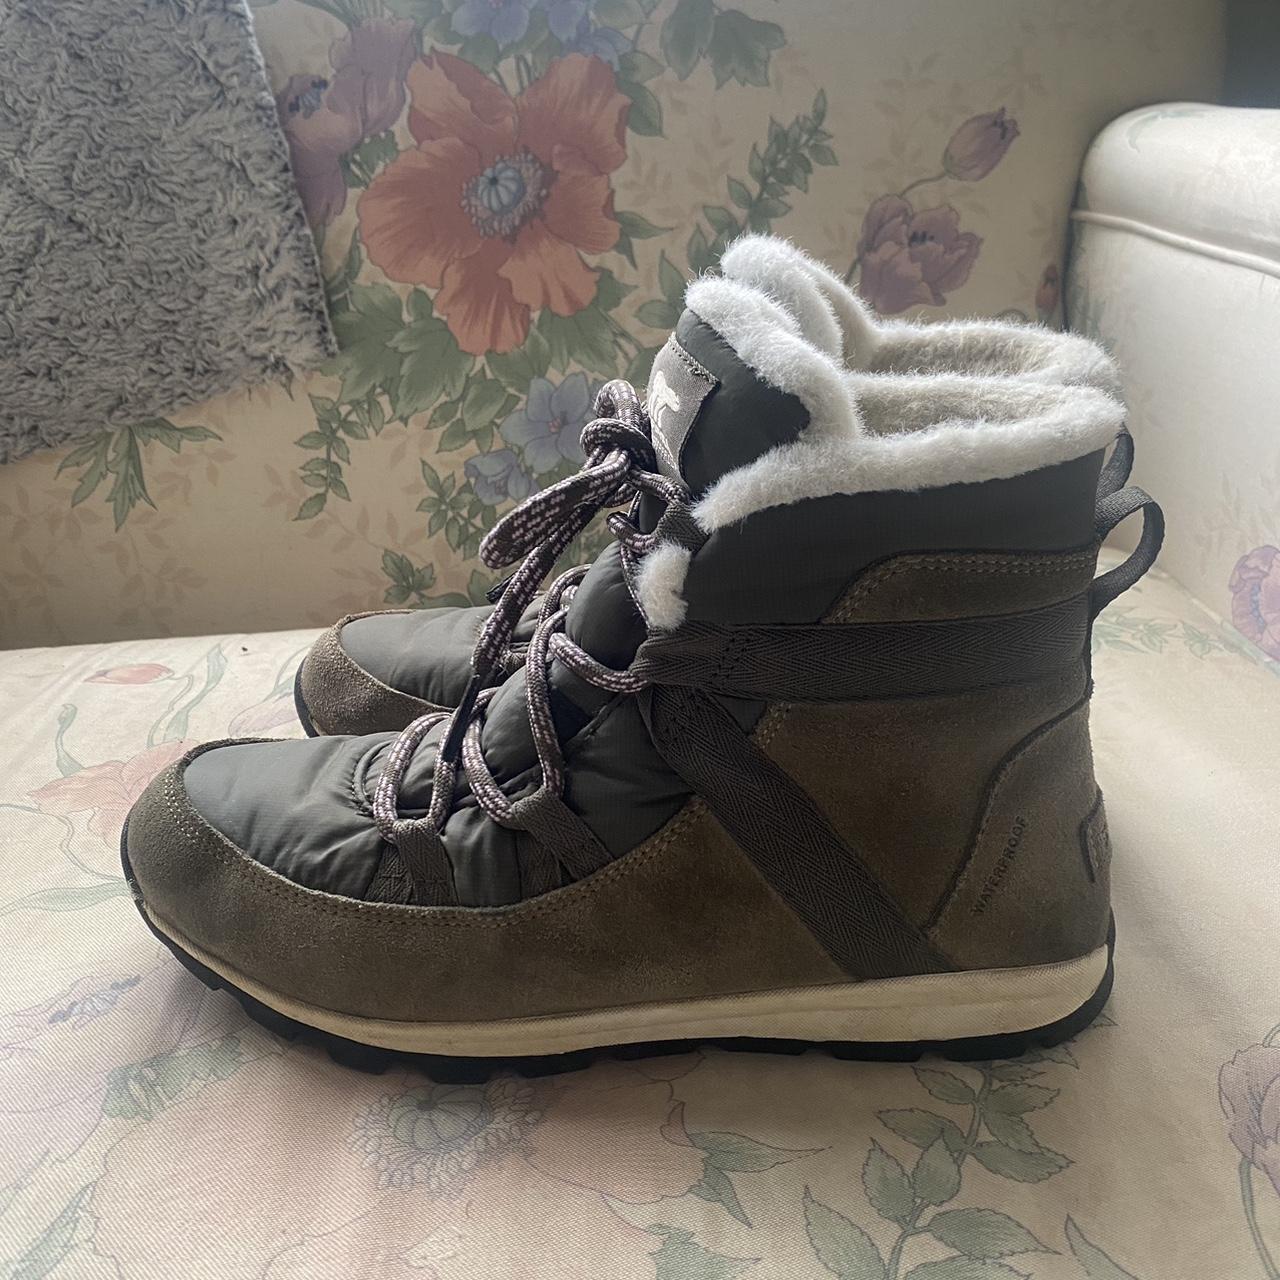 Sorel Women's Grey and Khaki Boots (3)